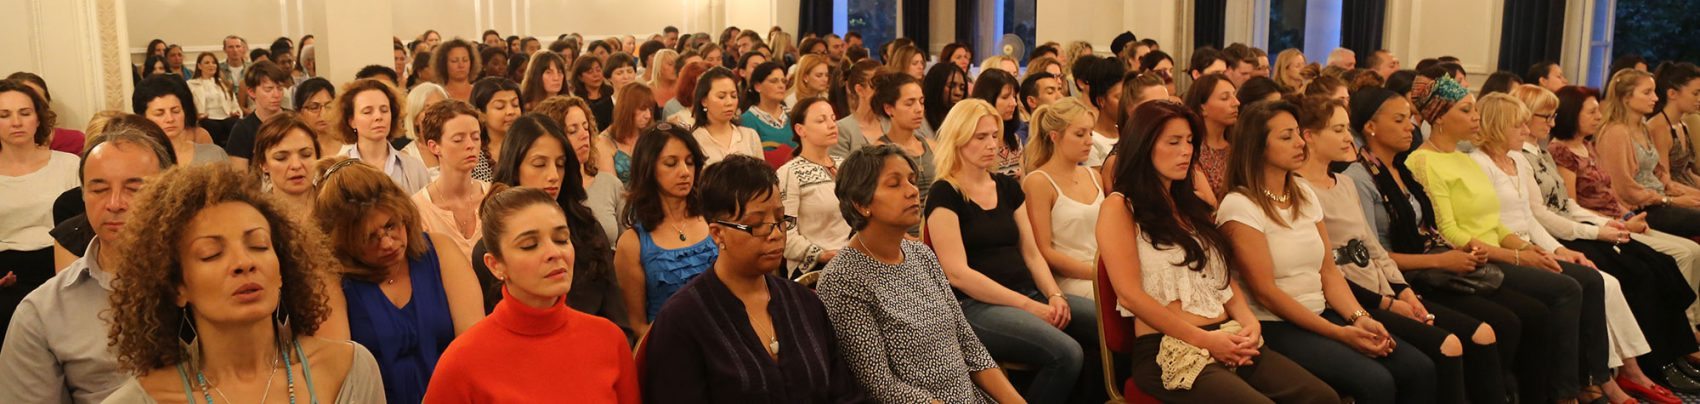 MeditationEvening Crowd - Theta Healing® Meditation Evening & Sound Bath